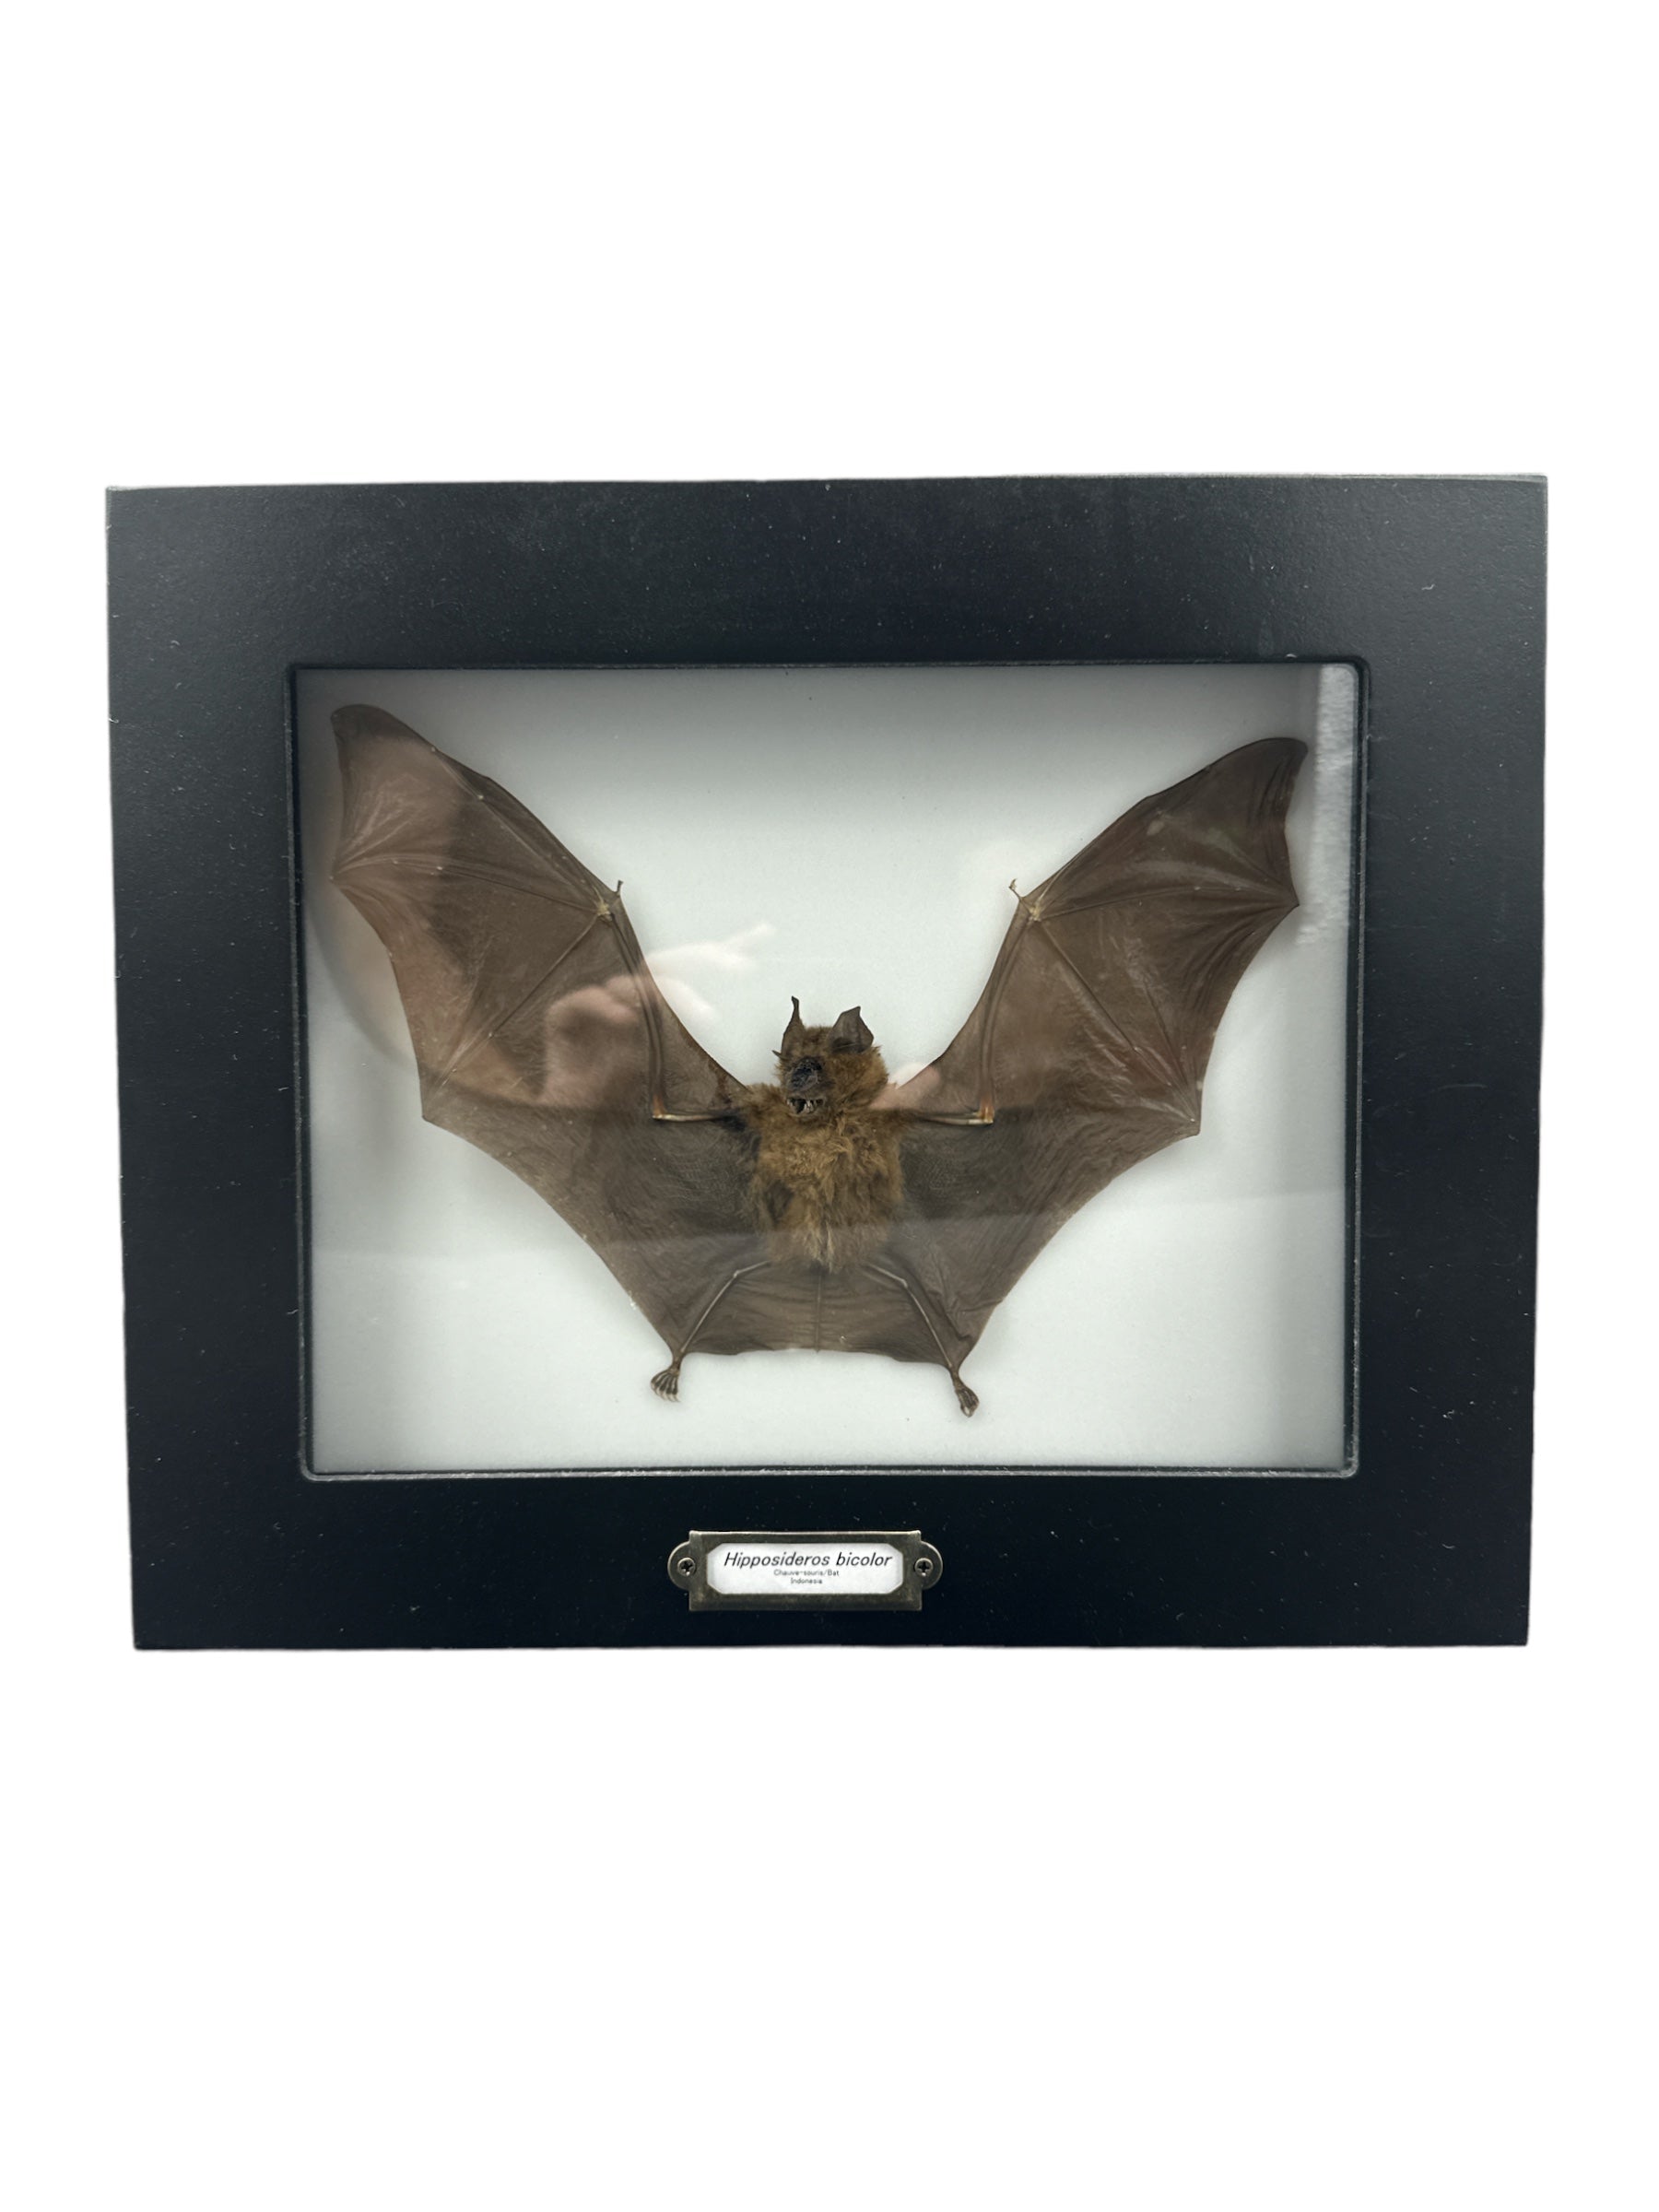 Bicolored Roundleaf Bat (Hipposideros bicolor) - 7x9" Frame